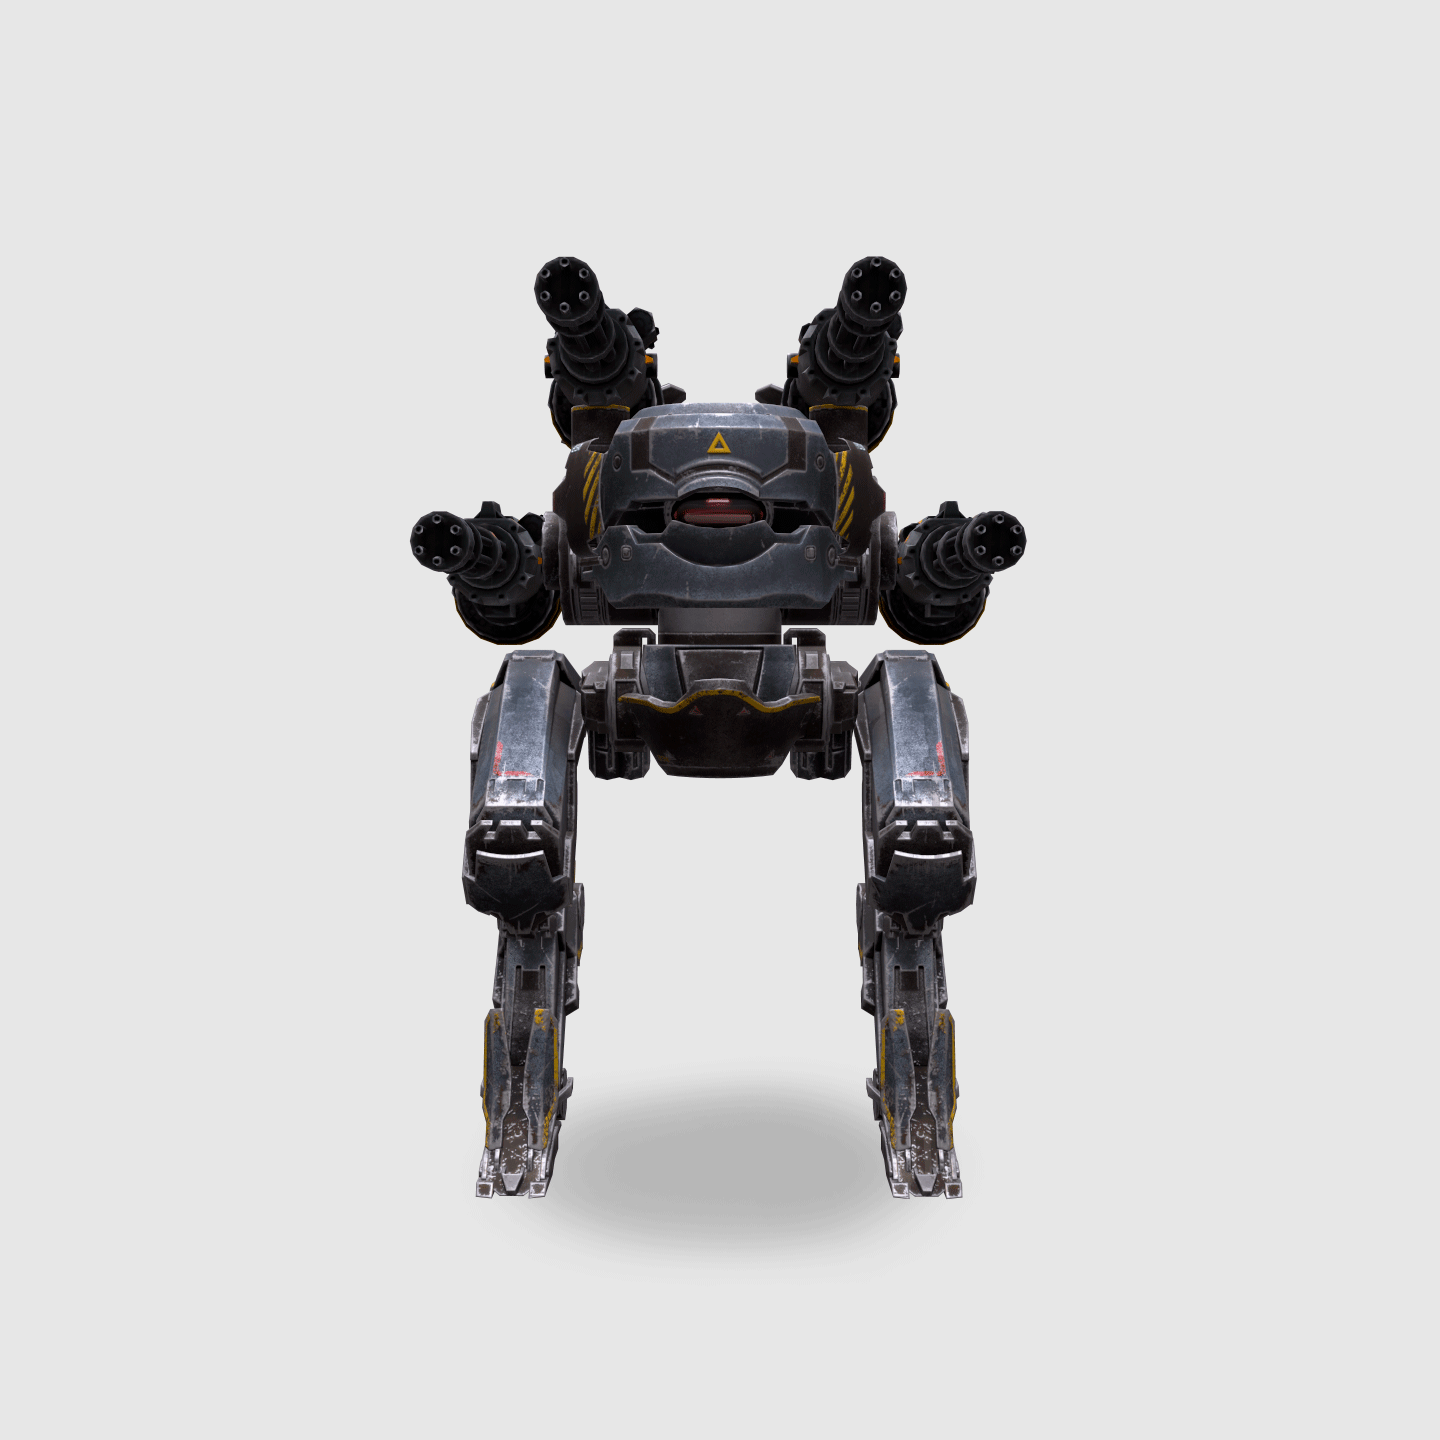 Blitz - War Robots1440 x 1440